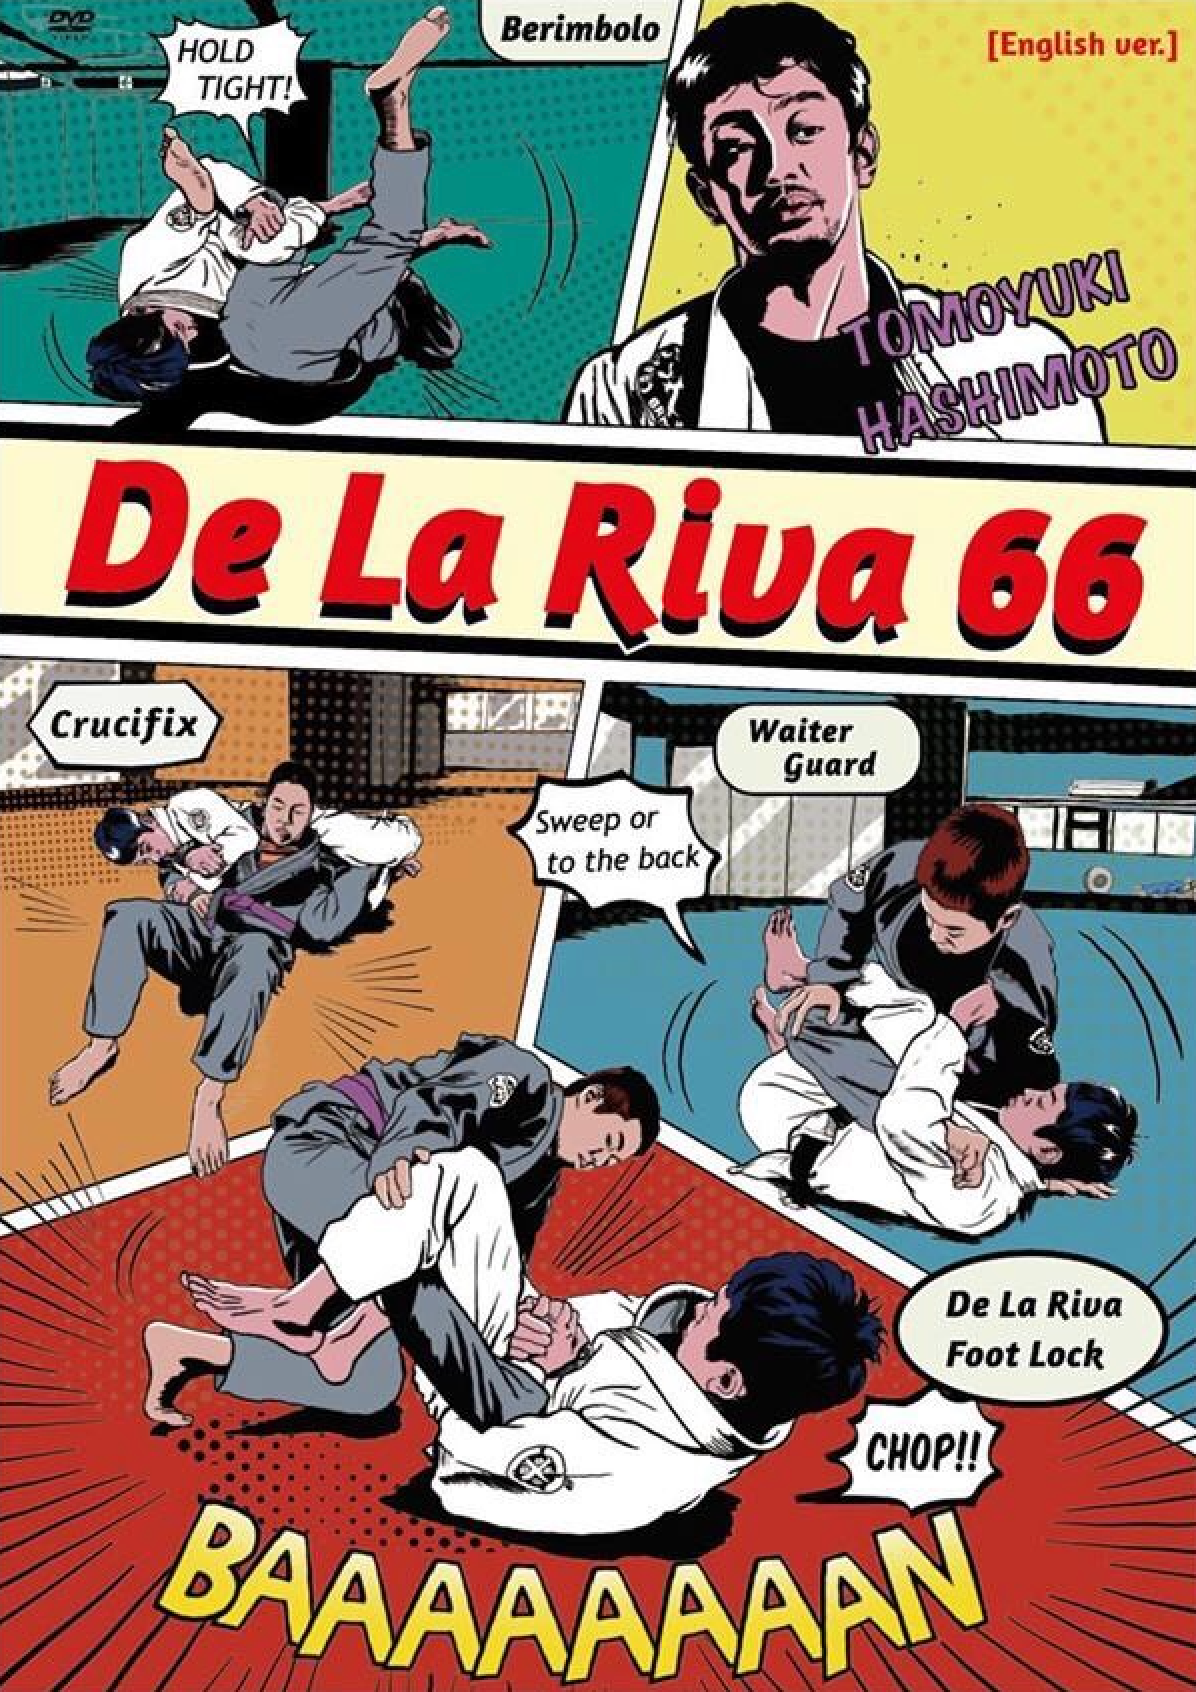 De La Riva 66 by Tomoyuki Hashimoto (2 DVD Set) - Budovideos Inc